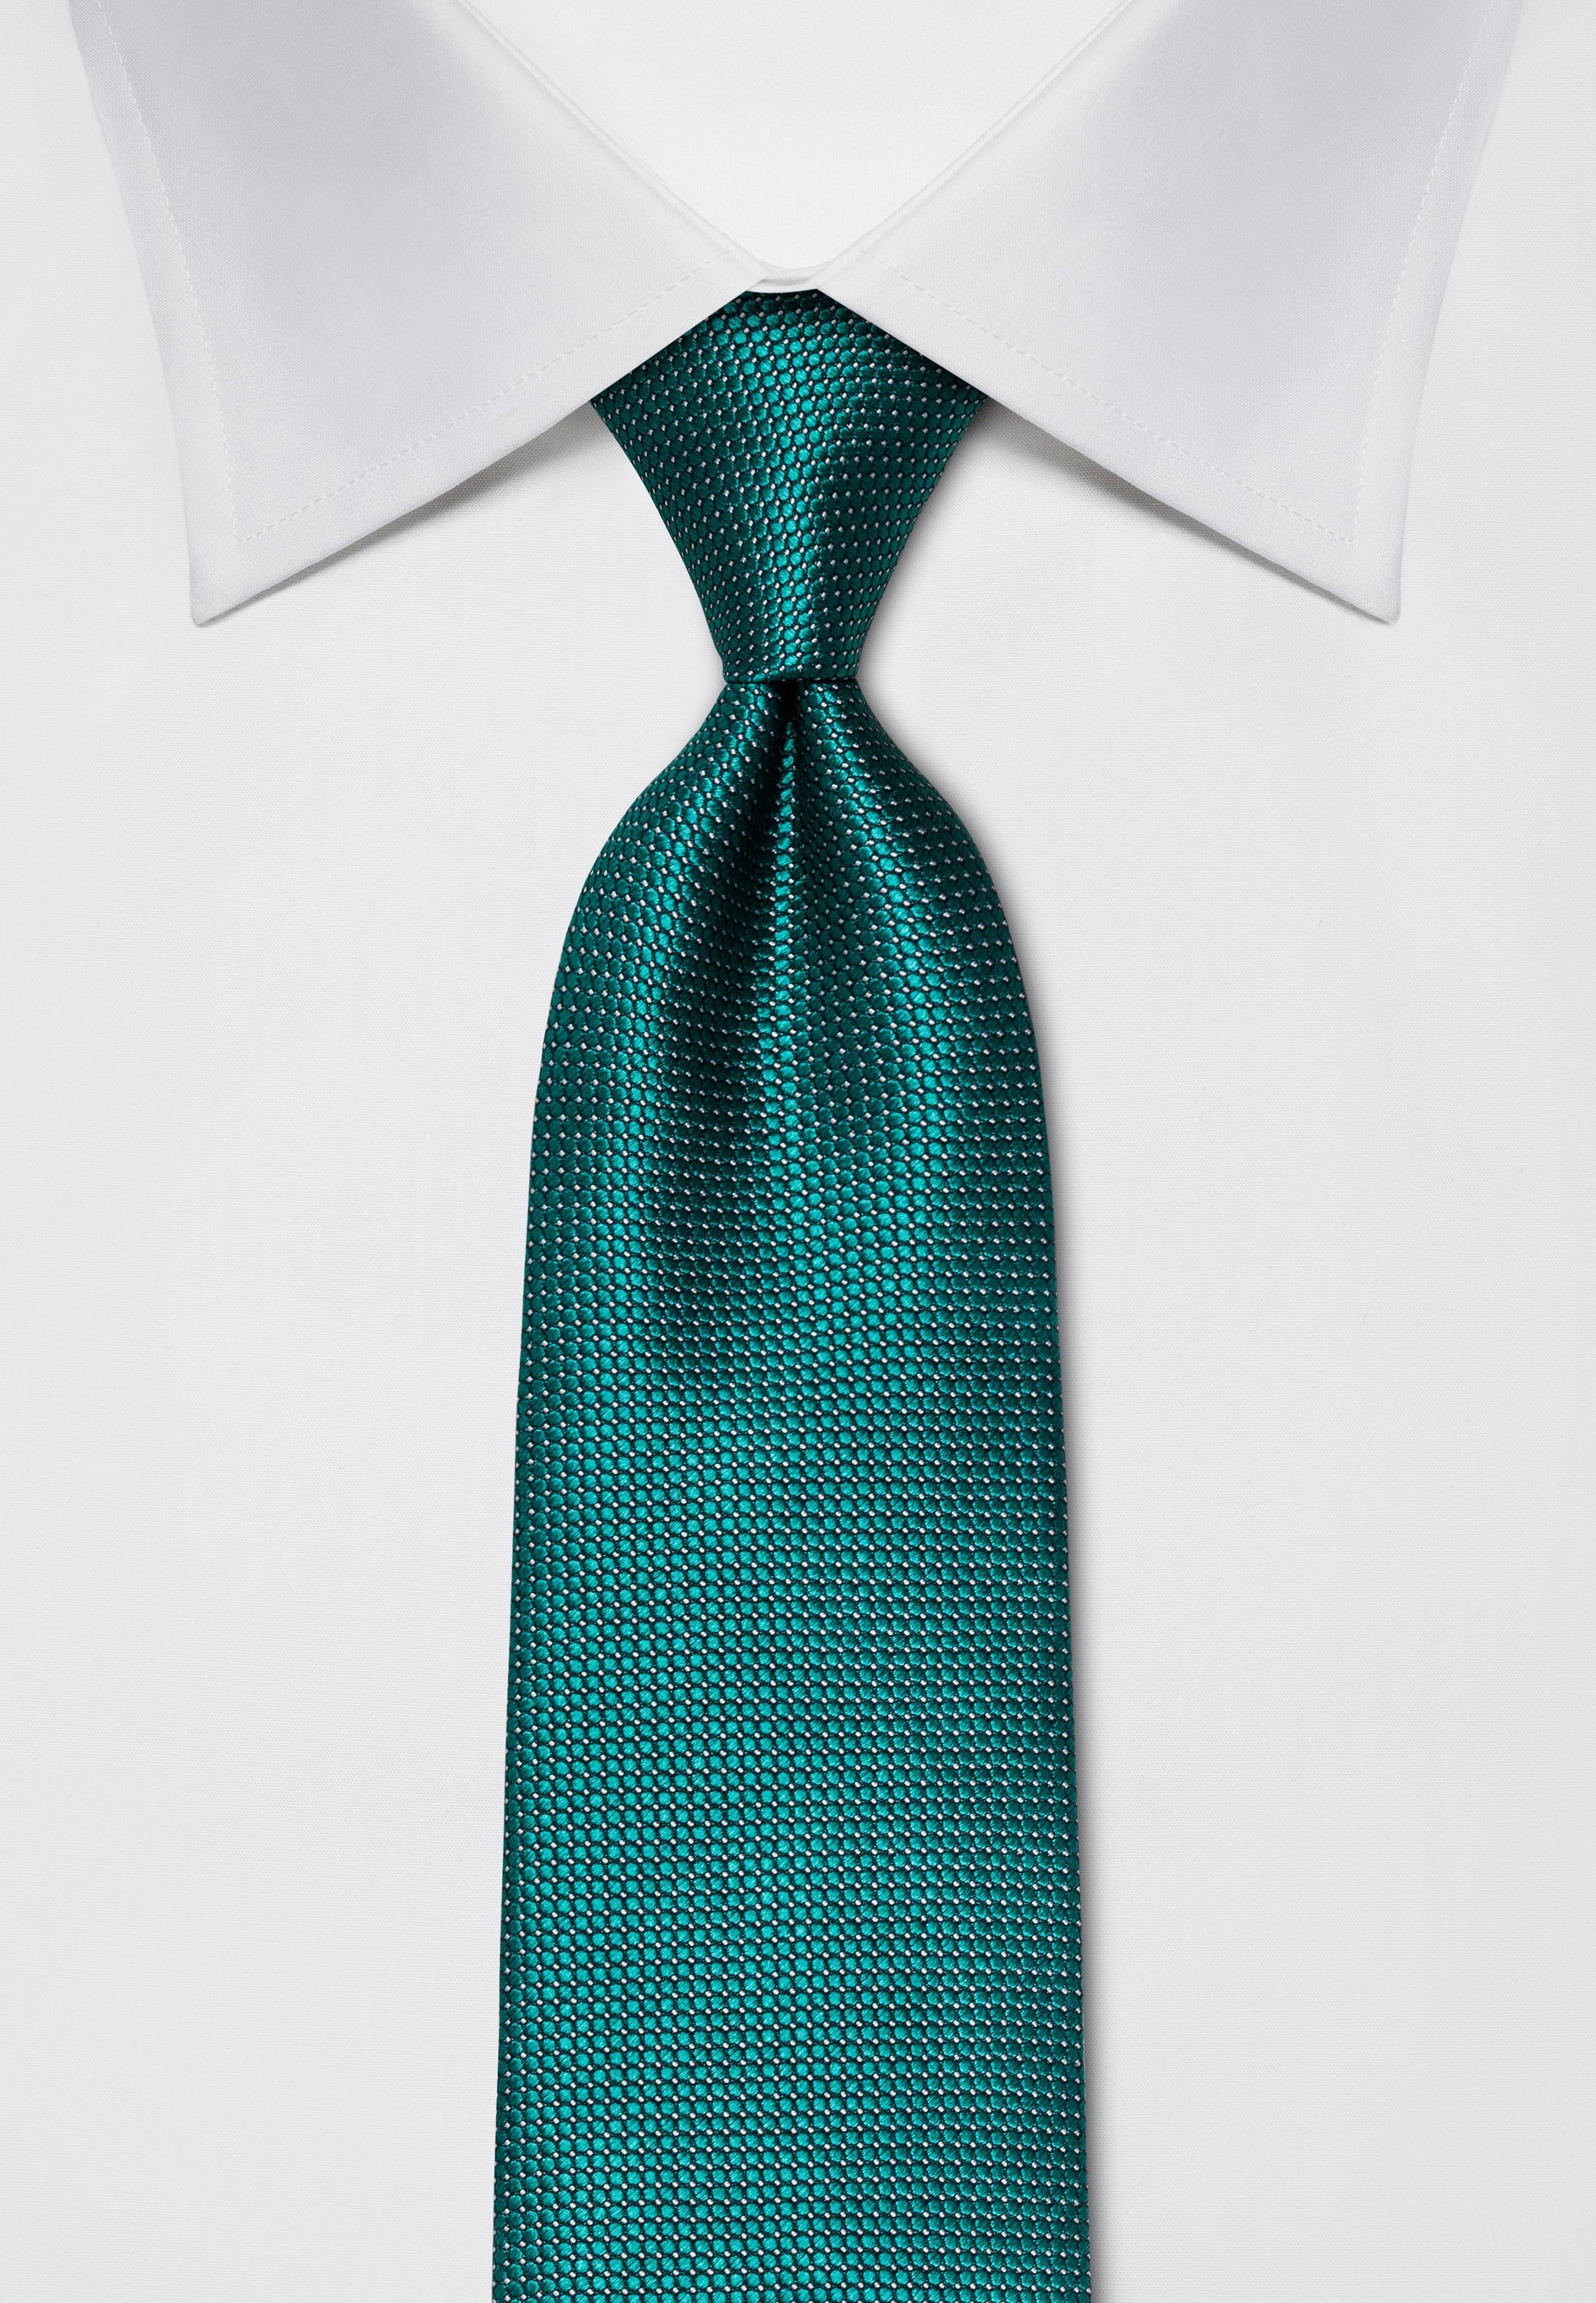 Krawatte smaragd Vincenzo Boretti gepunktet